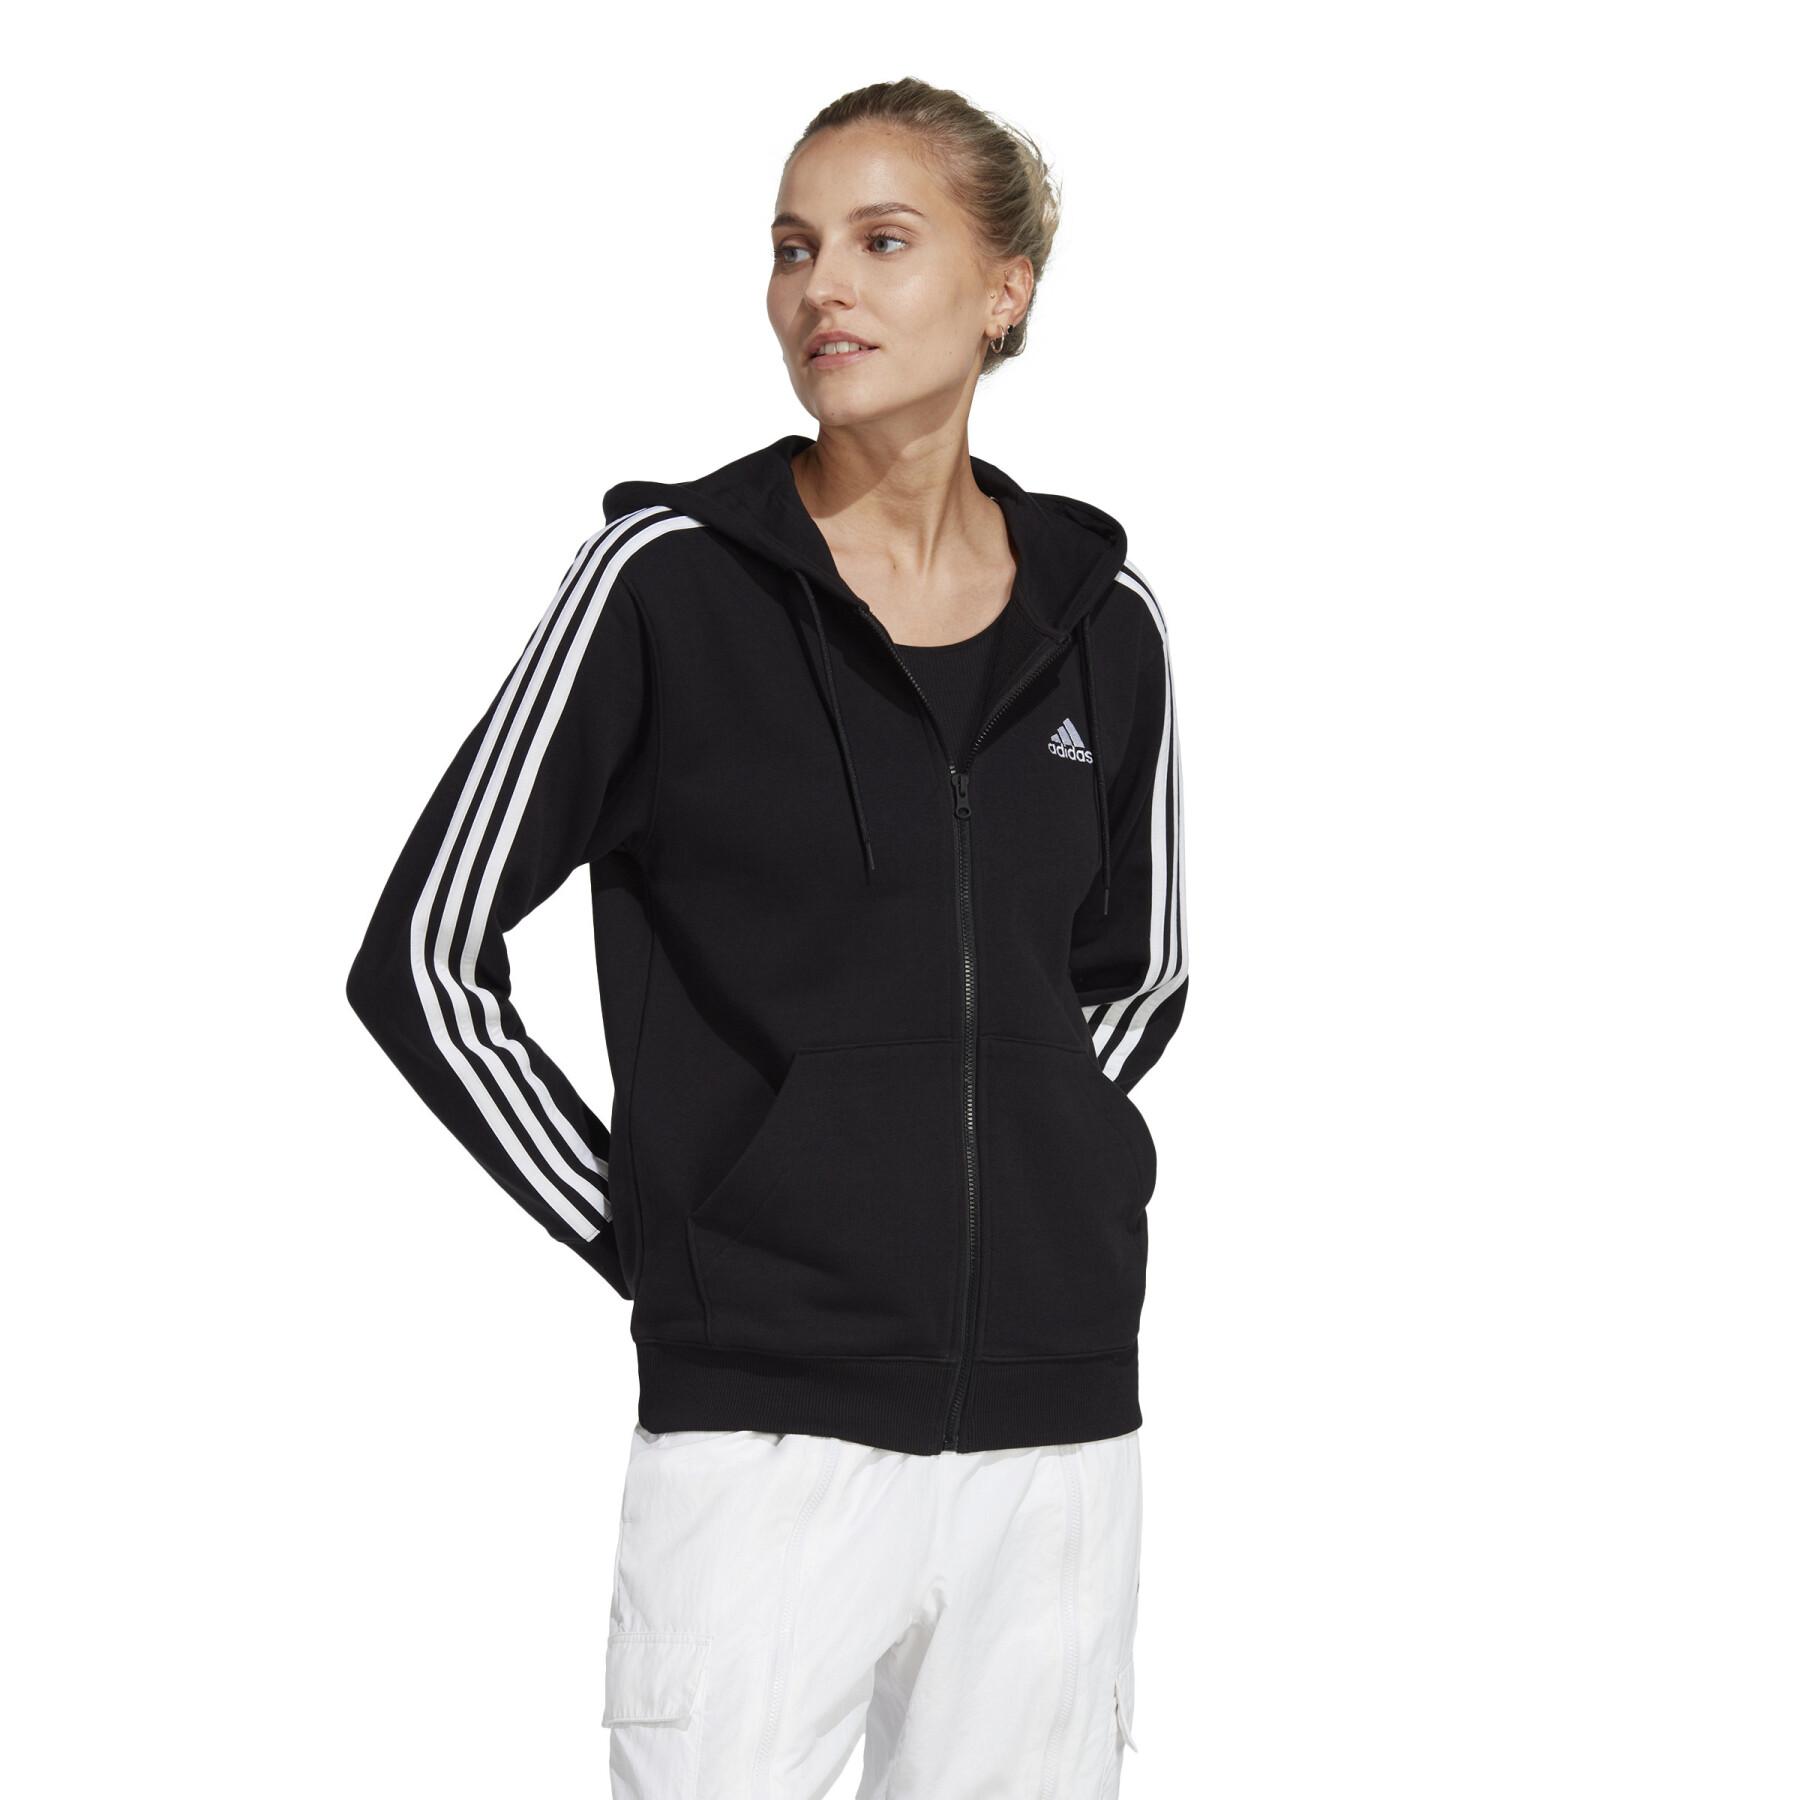 Sweatshirt regular full zip fleece hoodie woman adidas Essentials 3-Stripes  - adidas - Brands - Handball wear